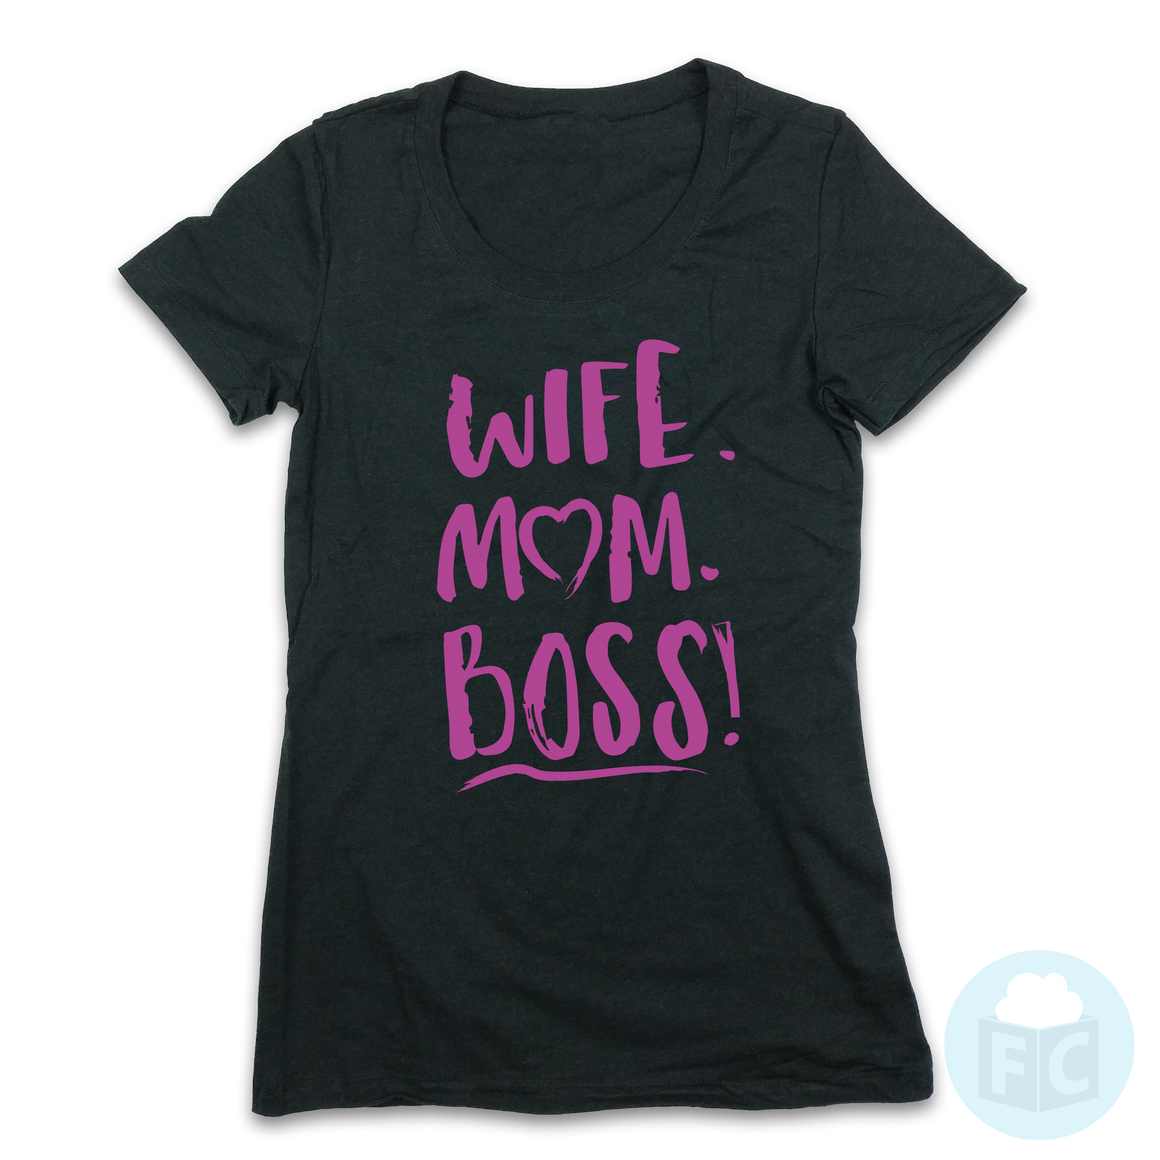 Wife, Mom, Boss!